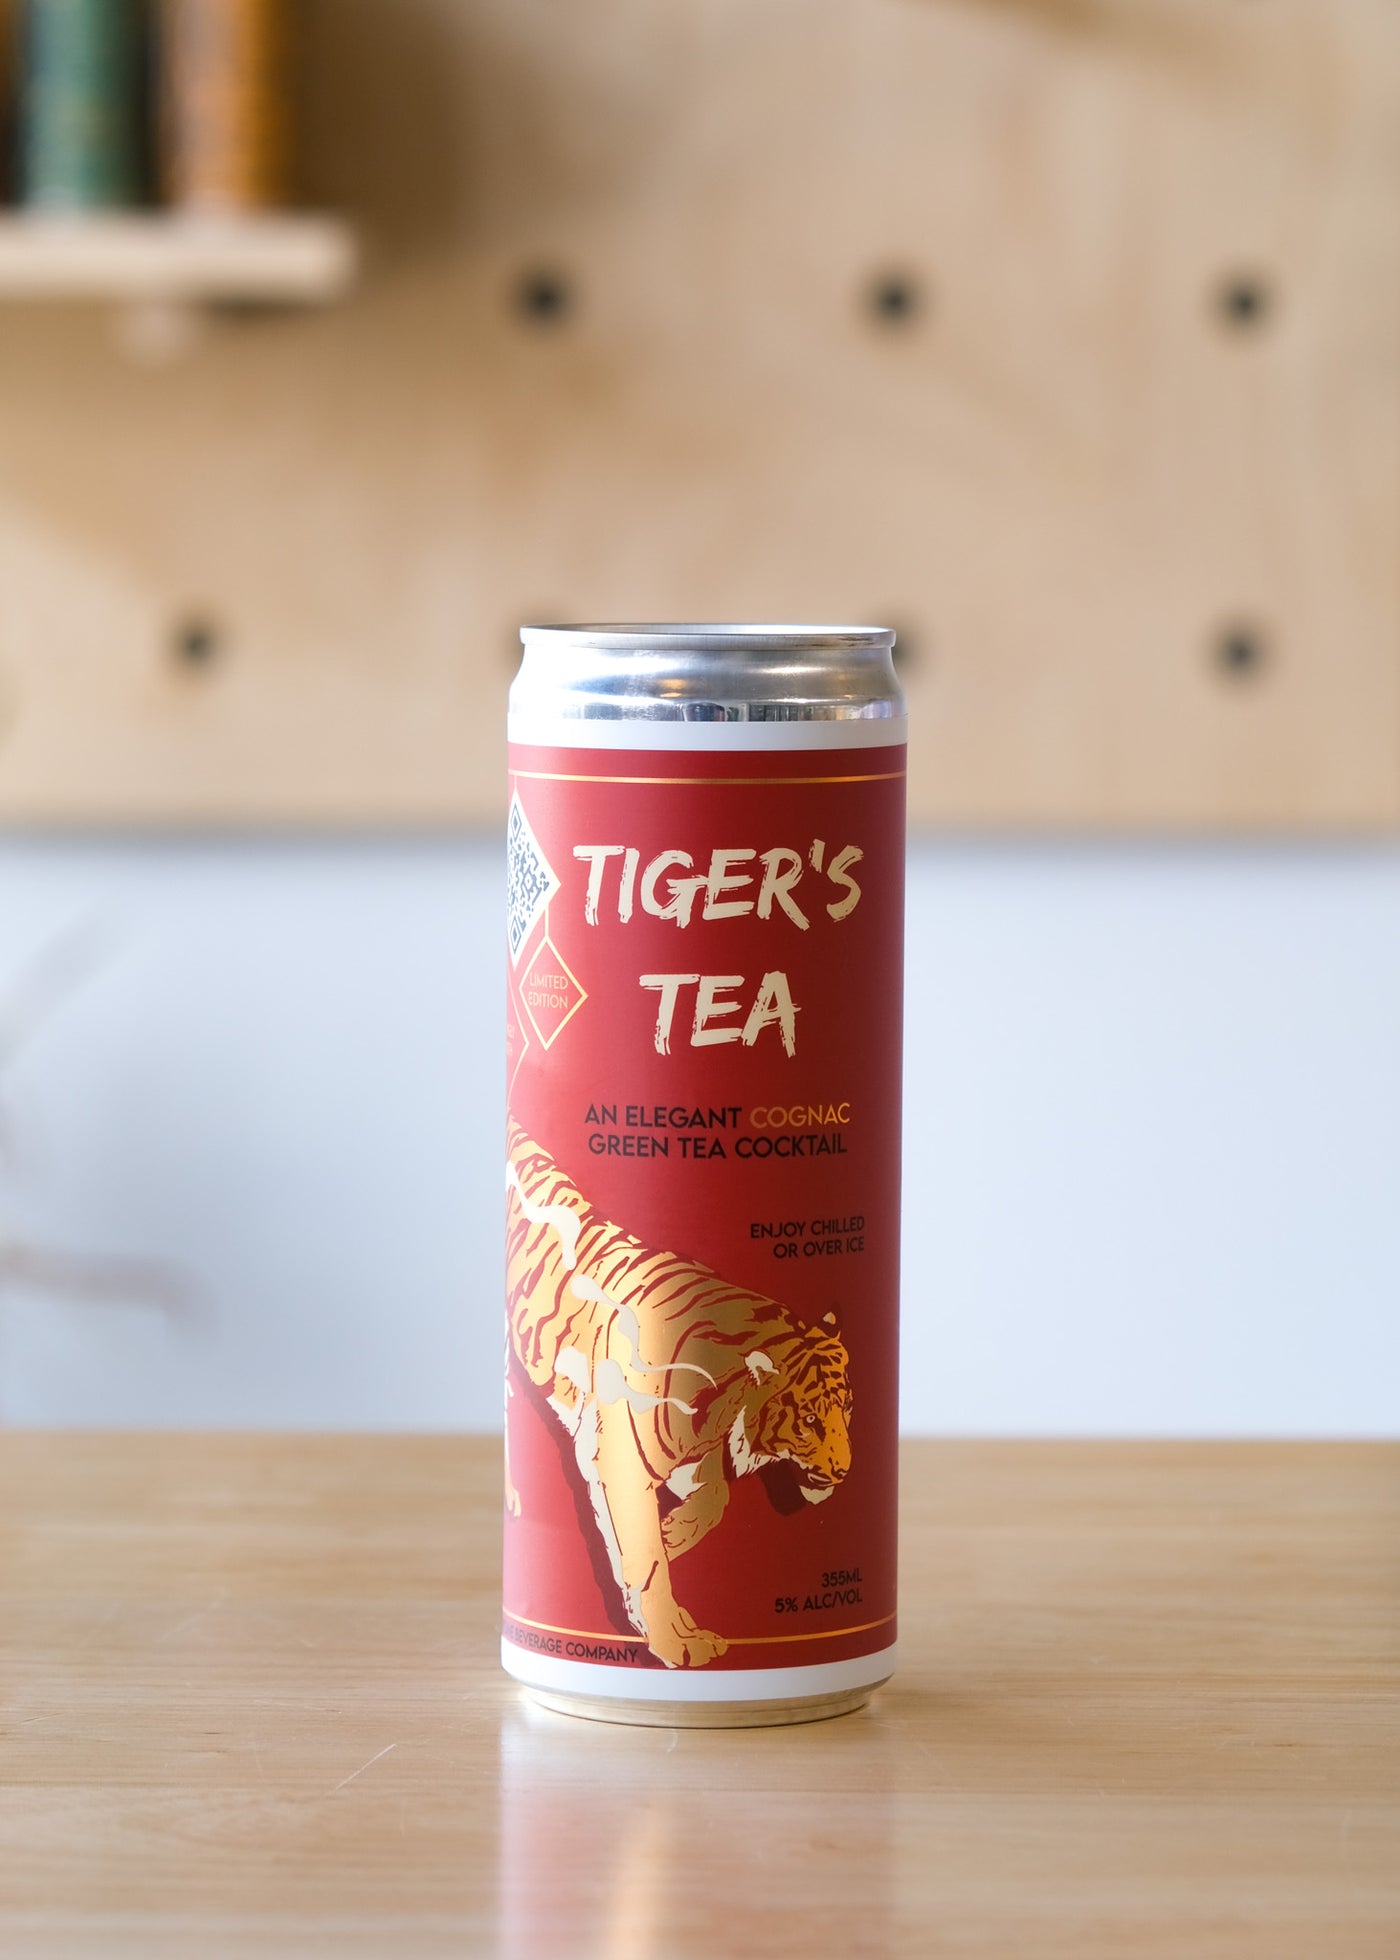 TIGER'S TEA | Cognac Green Tea Cocktail